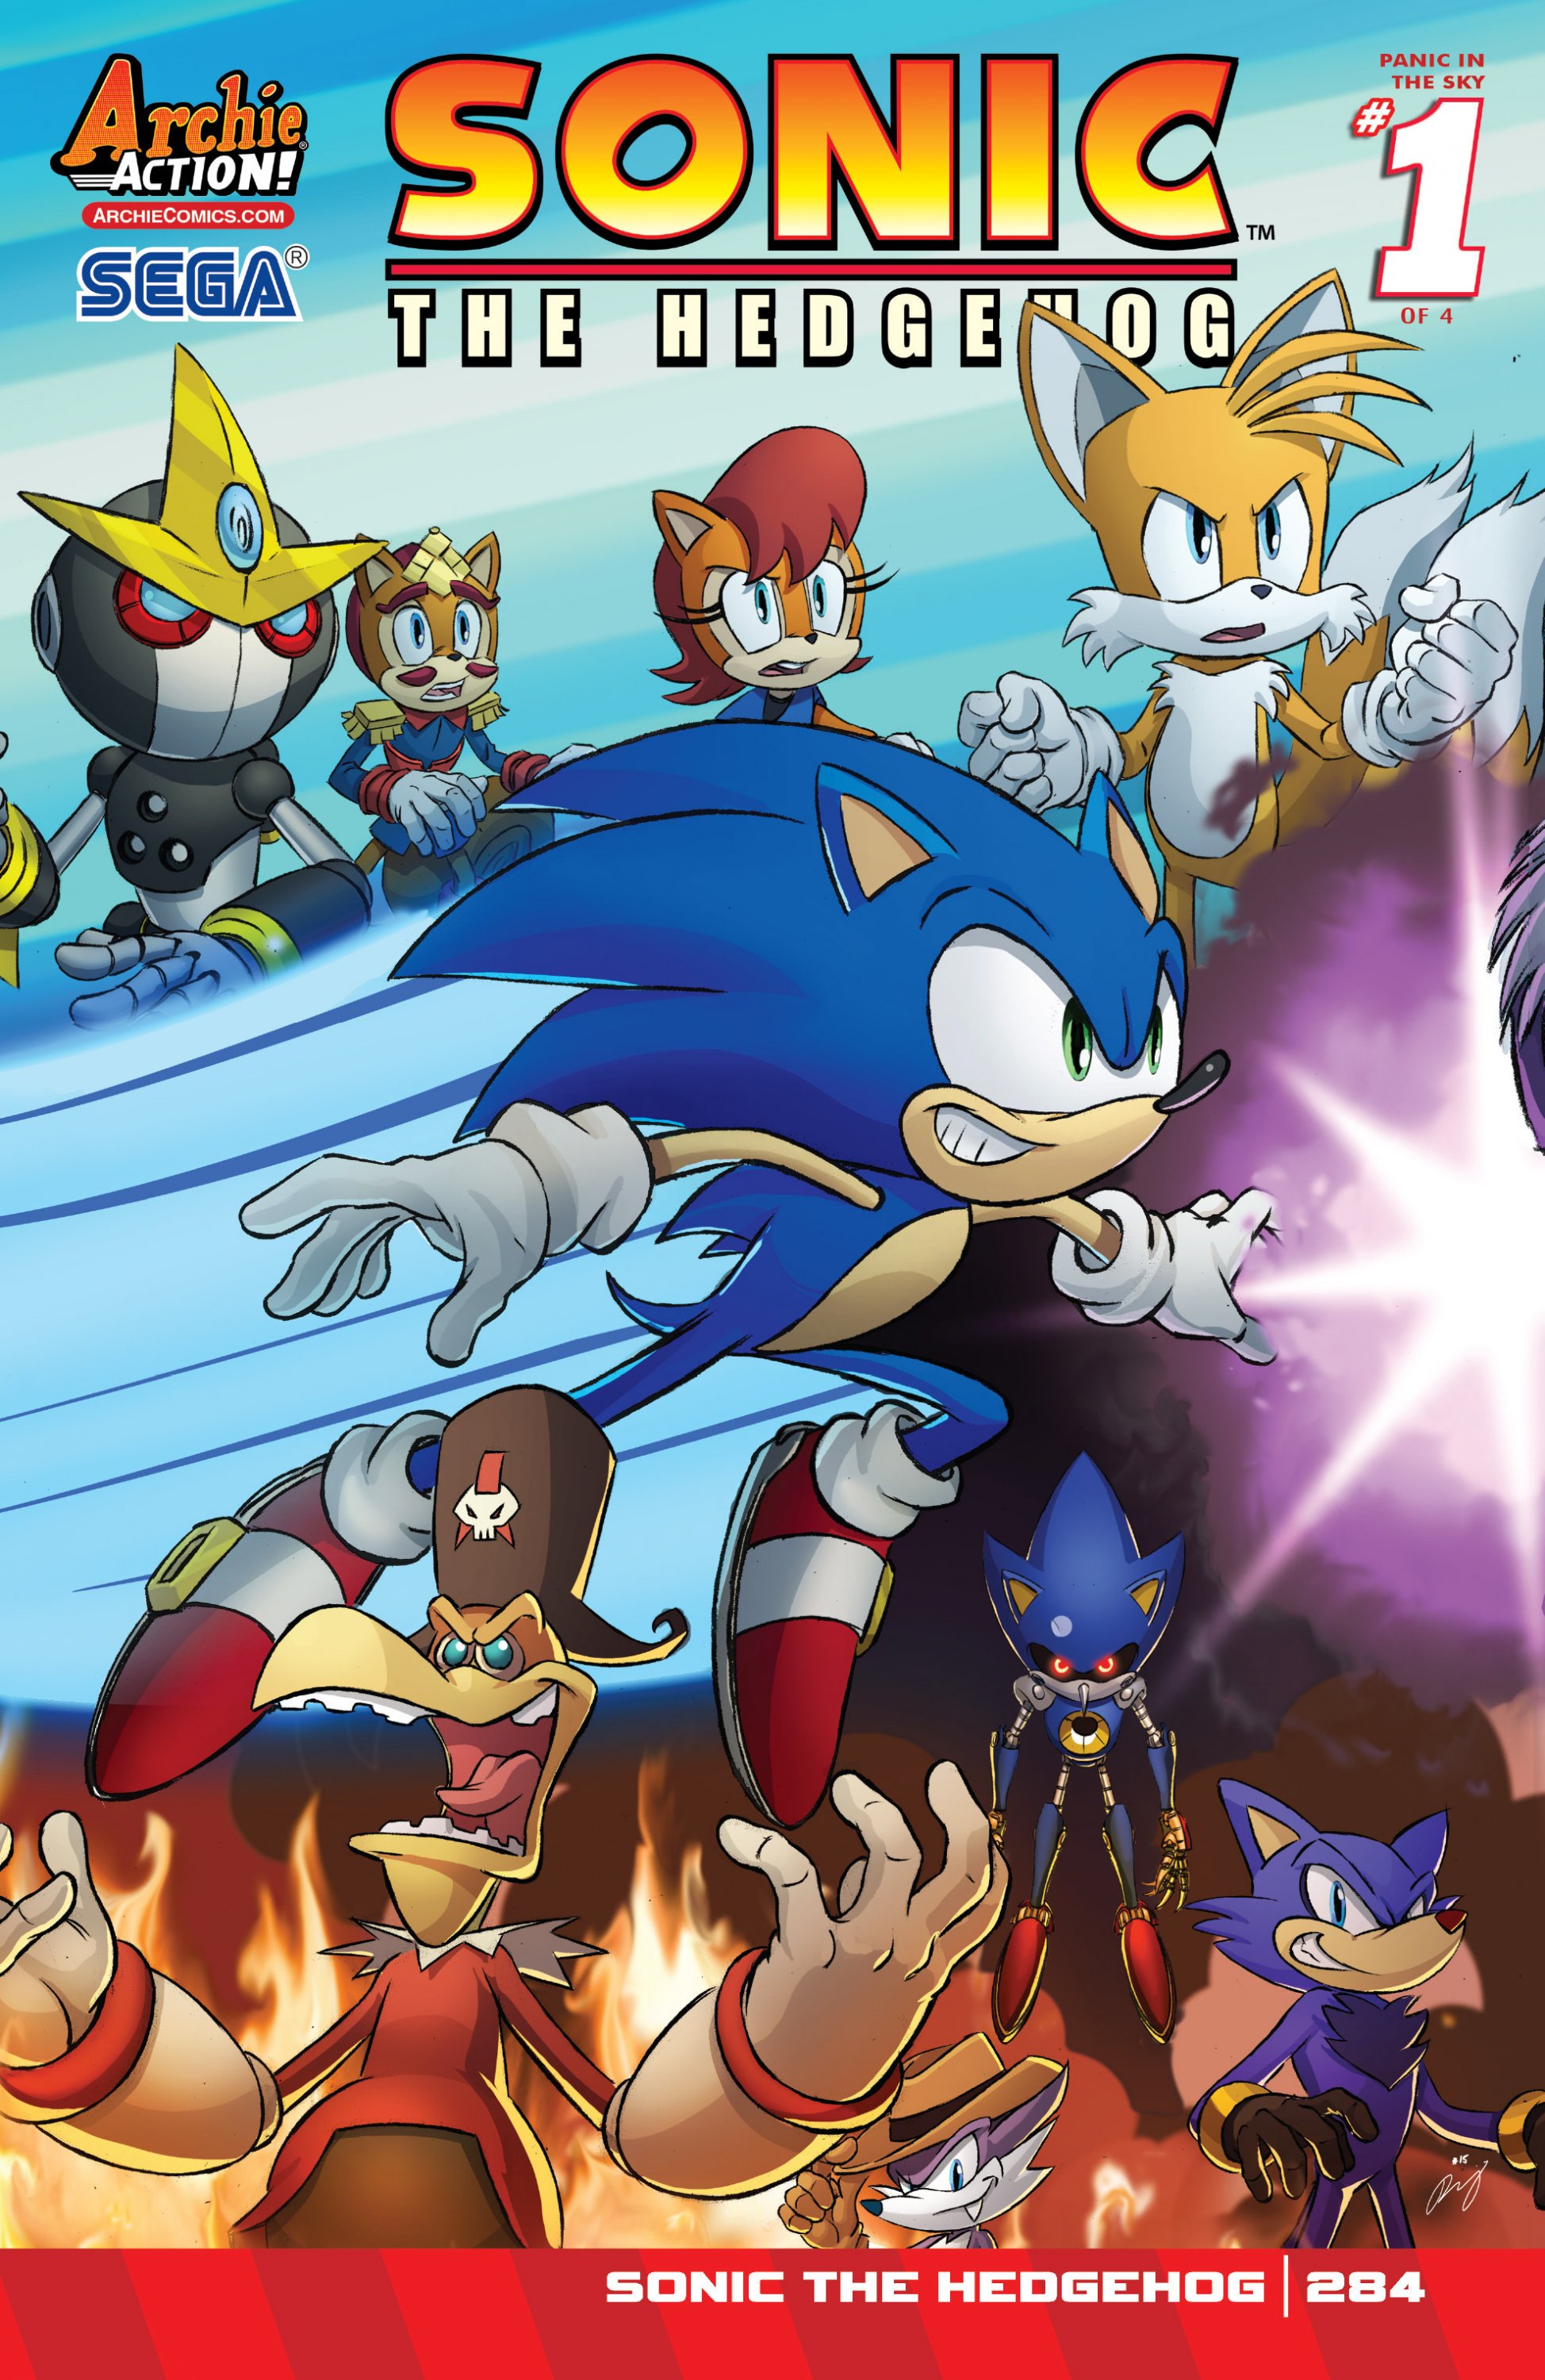 Sonic the Hedgehog 284 (September 2016)